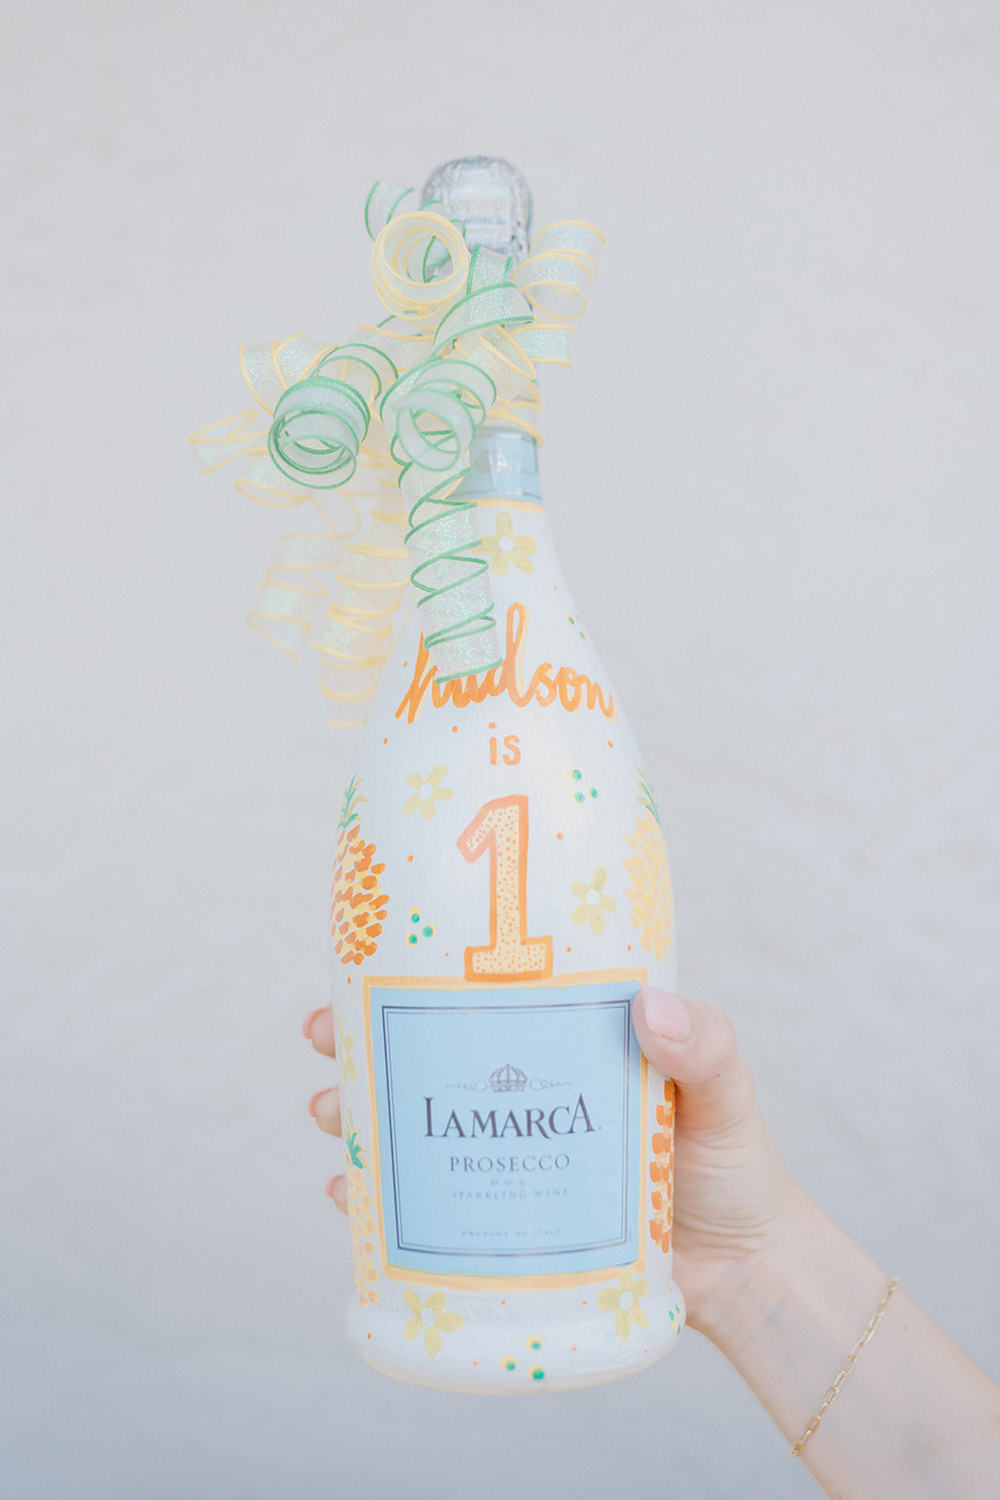 champagne bottle gift idea for birthday